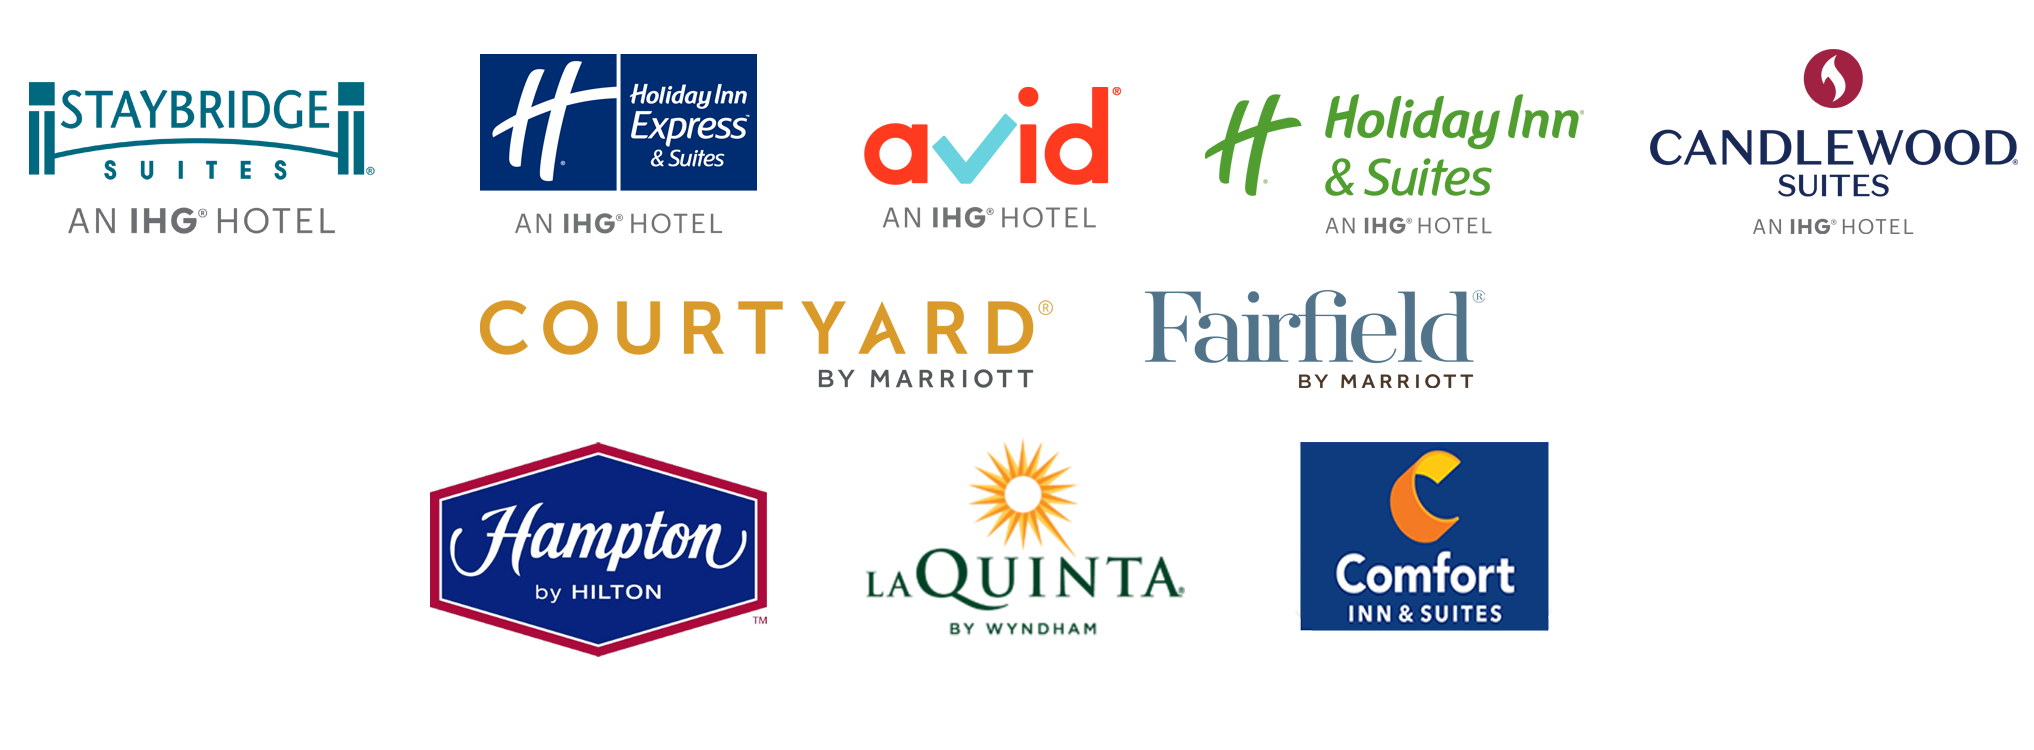 Hotel Brands Managed